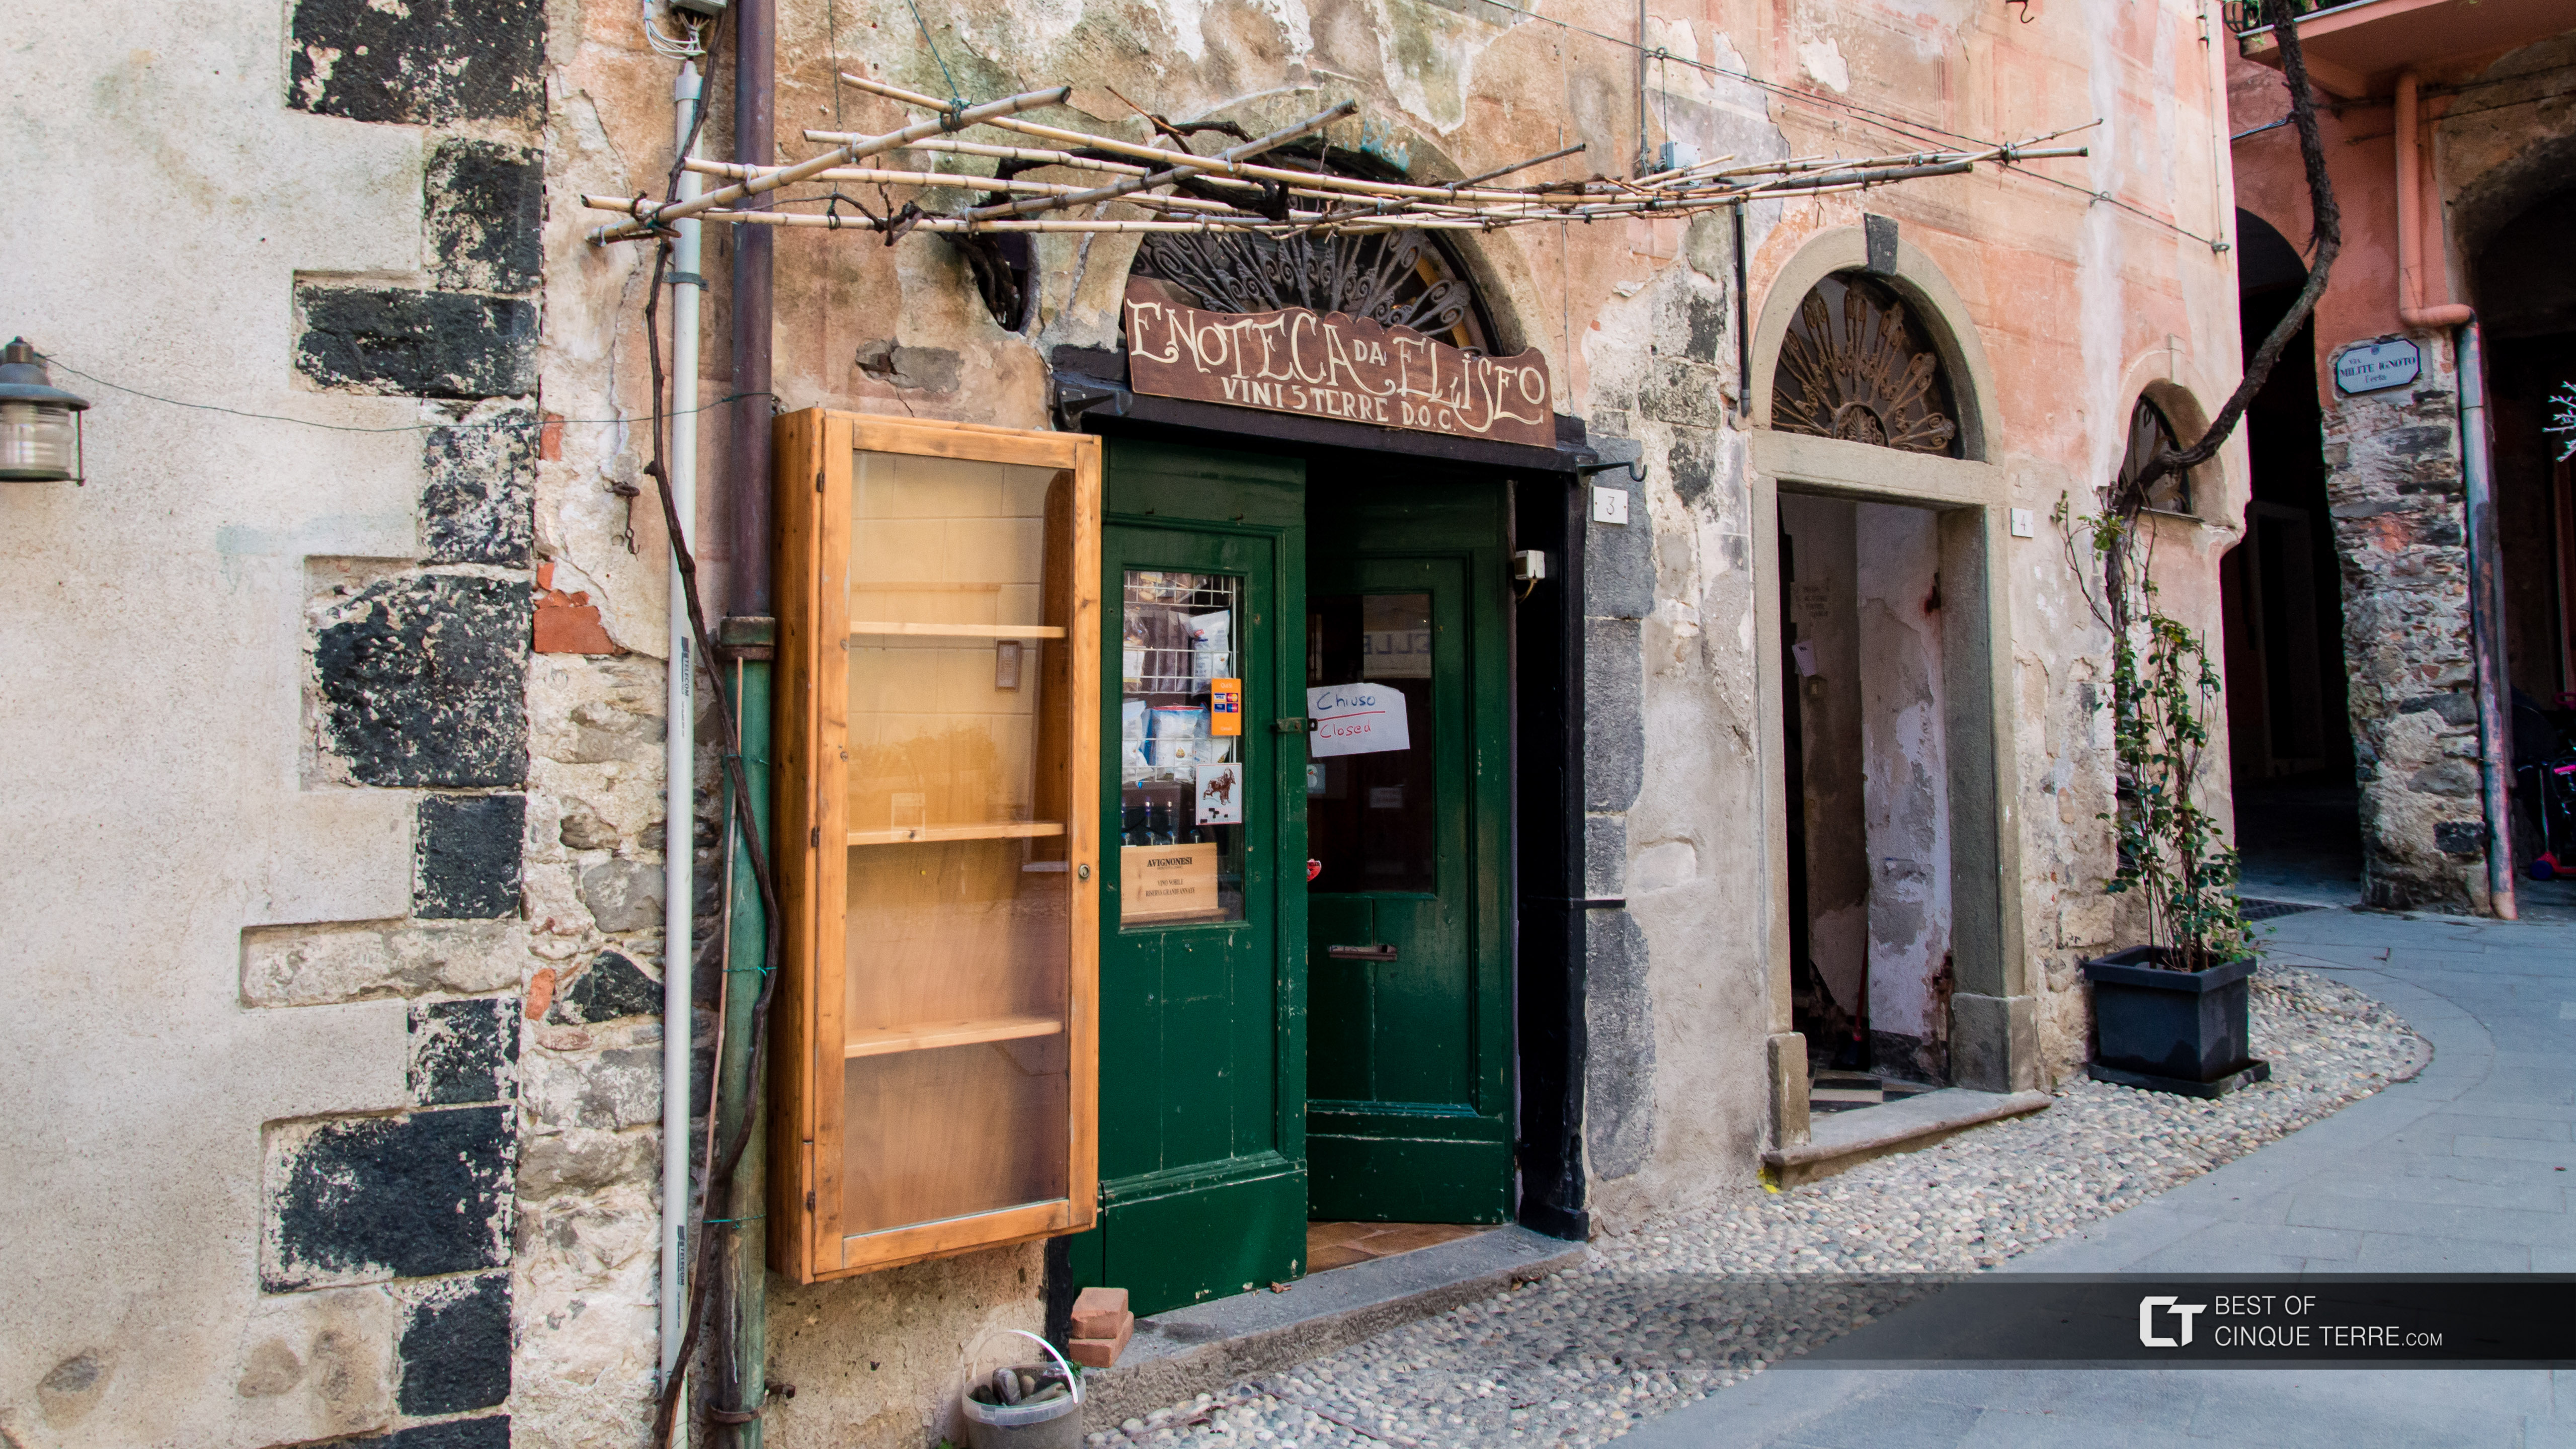 Loja de vinhos do Eliseo, Monterosso al Mare, Cinque Terre, Itália